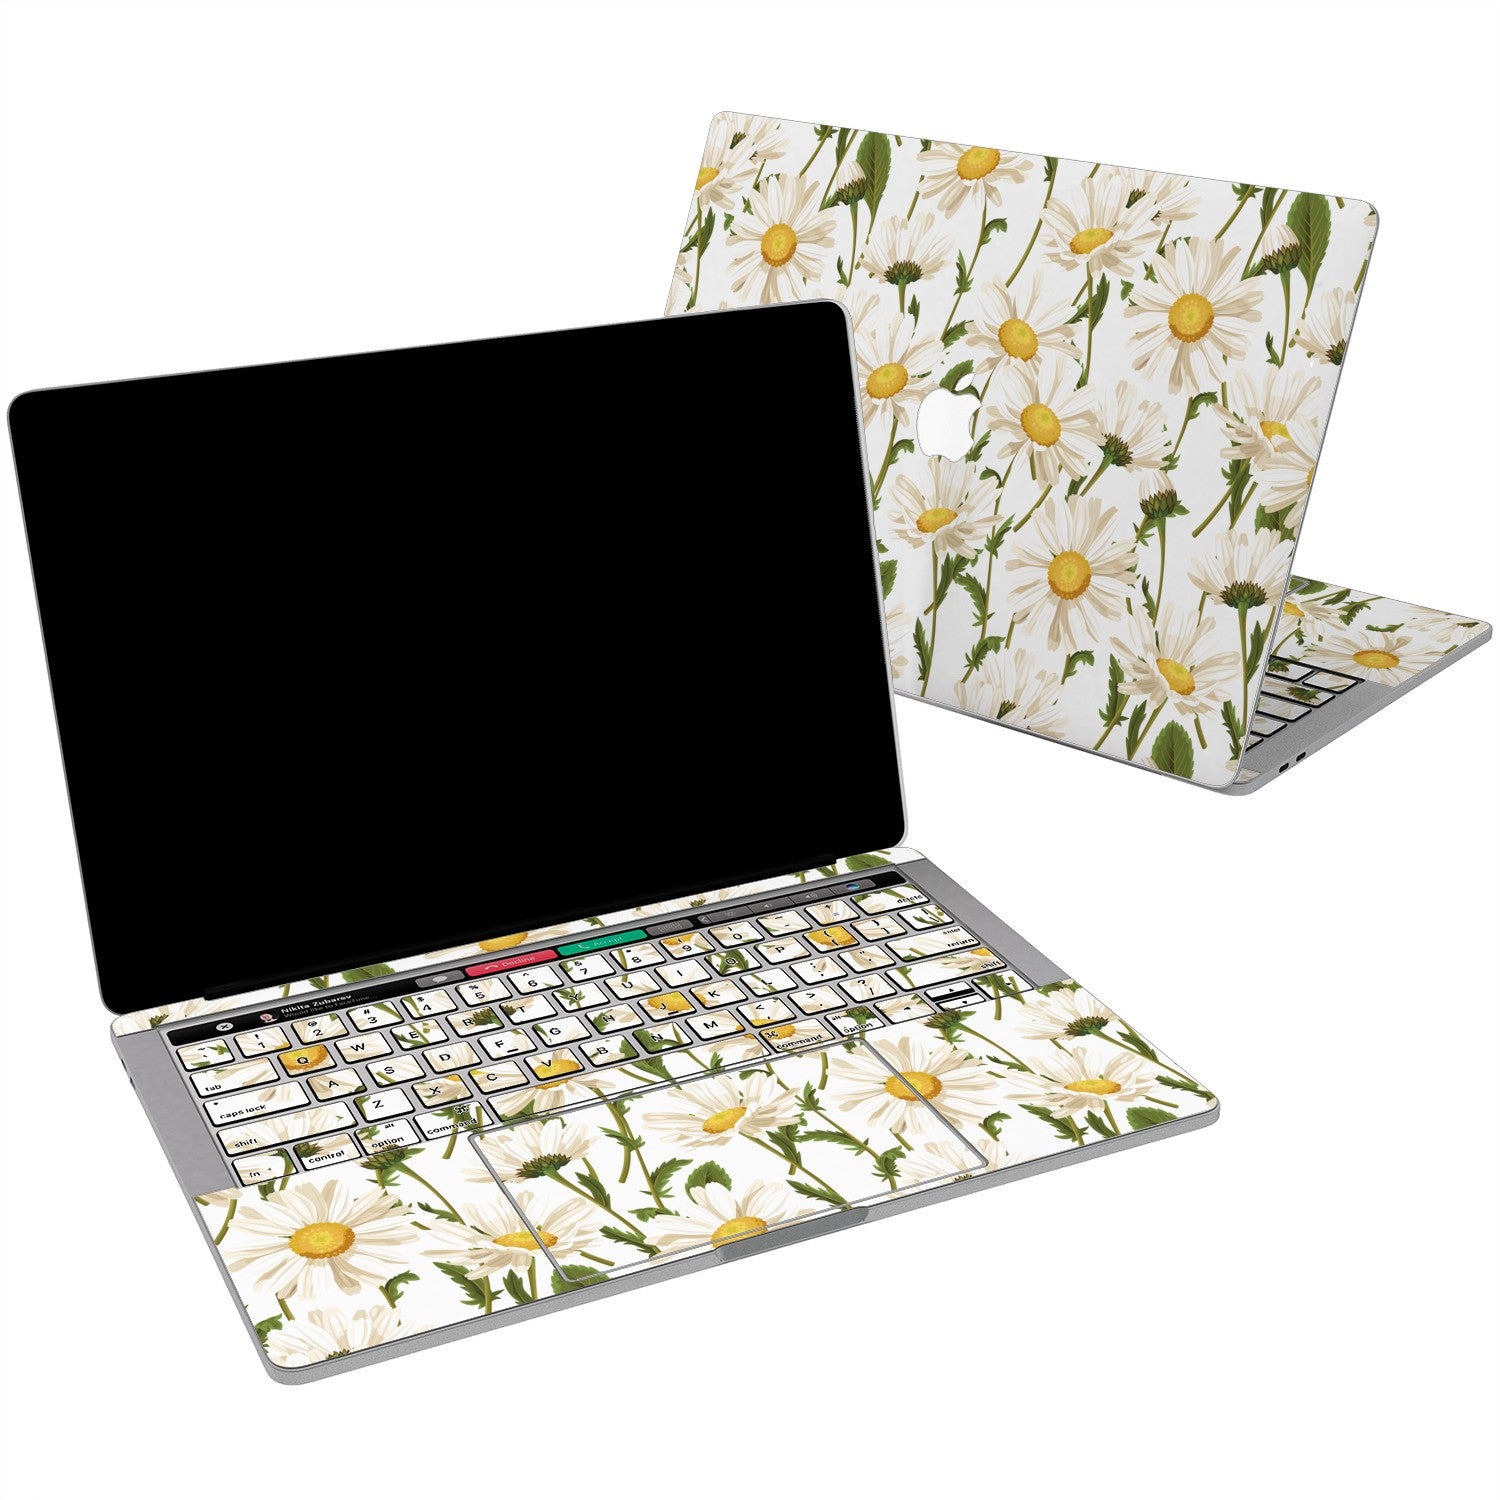 Lex Altern Daisy Flowers Art Vinyl Skin for your Laptop Apple Macbook.